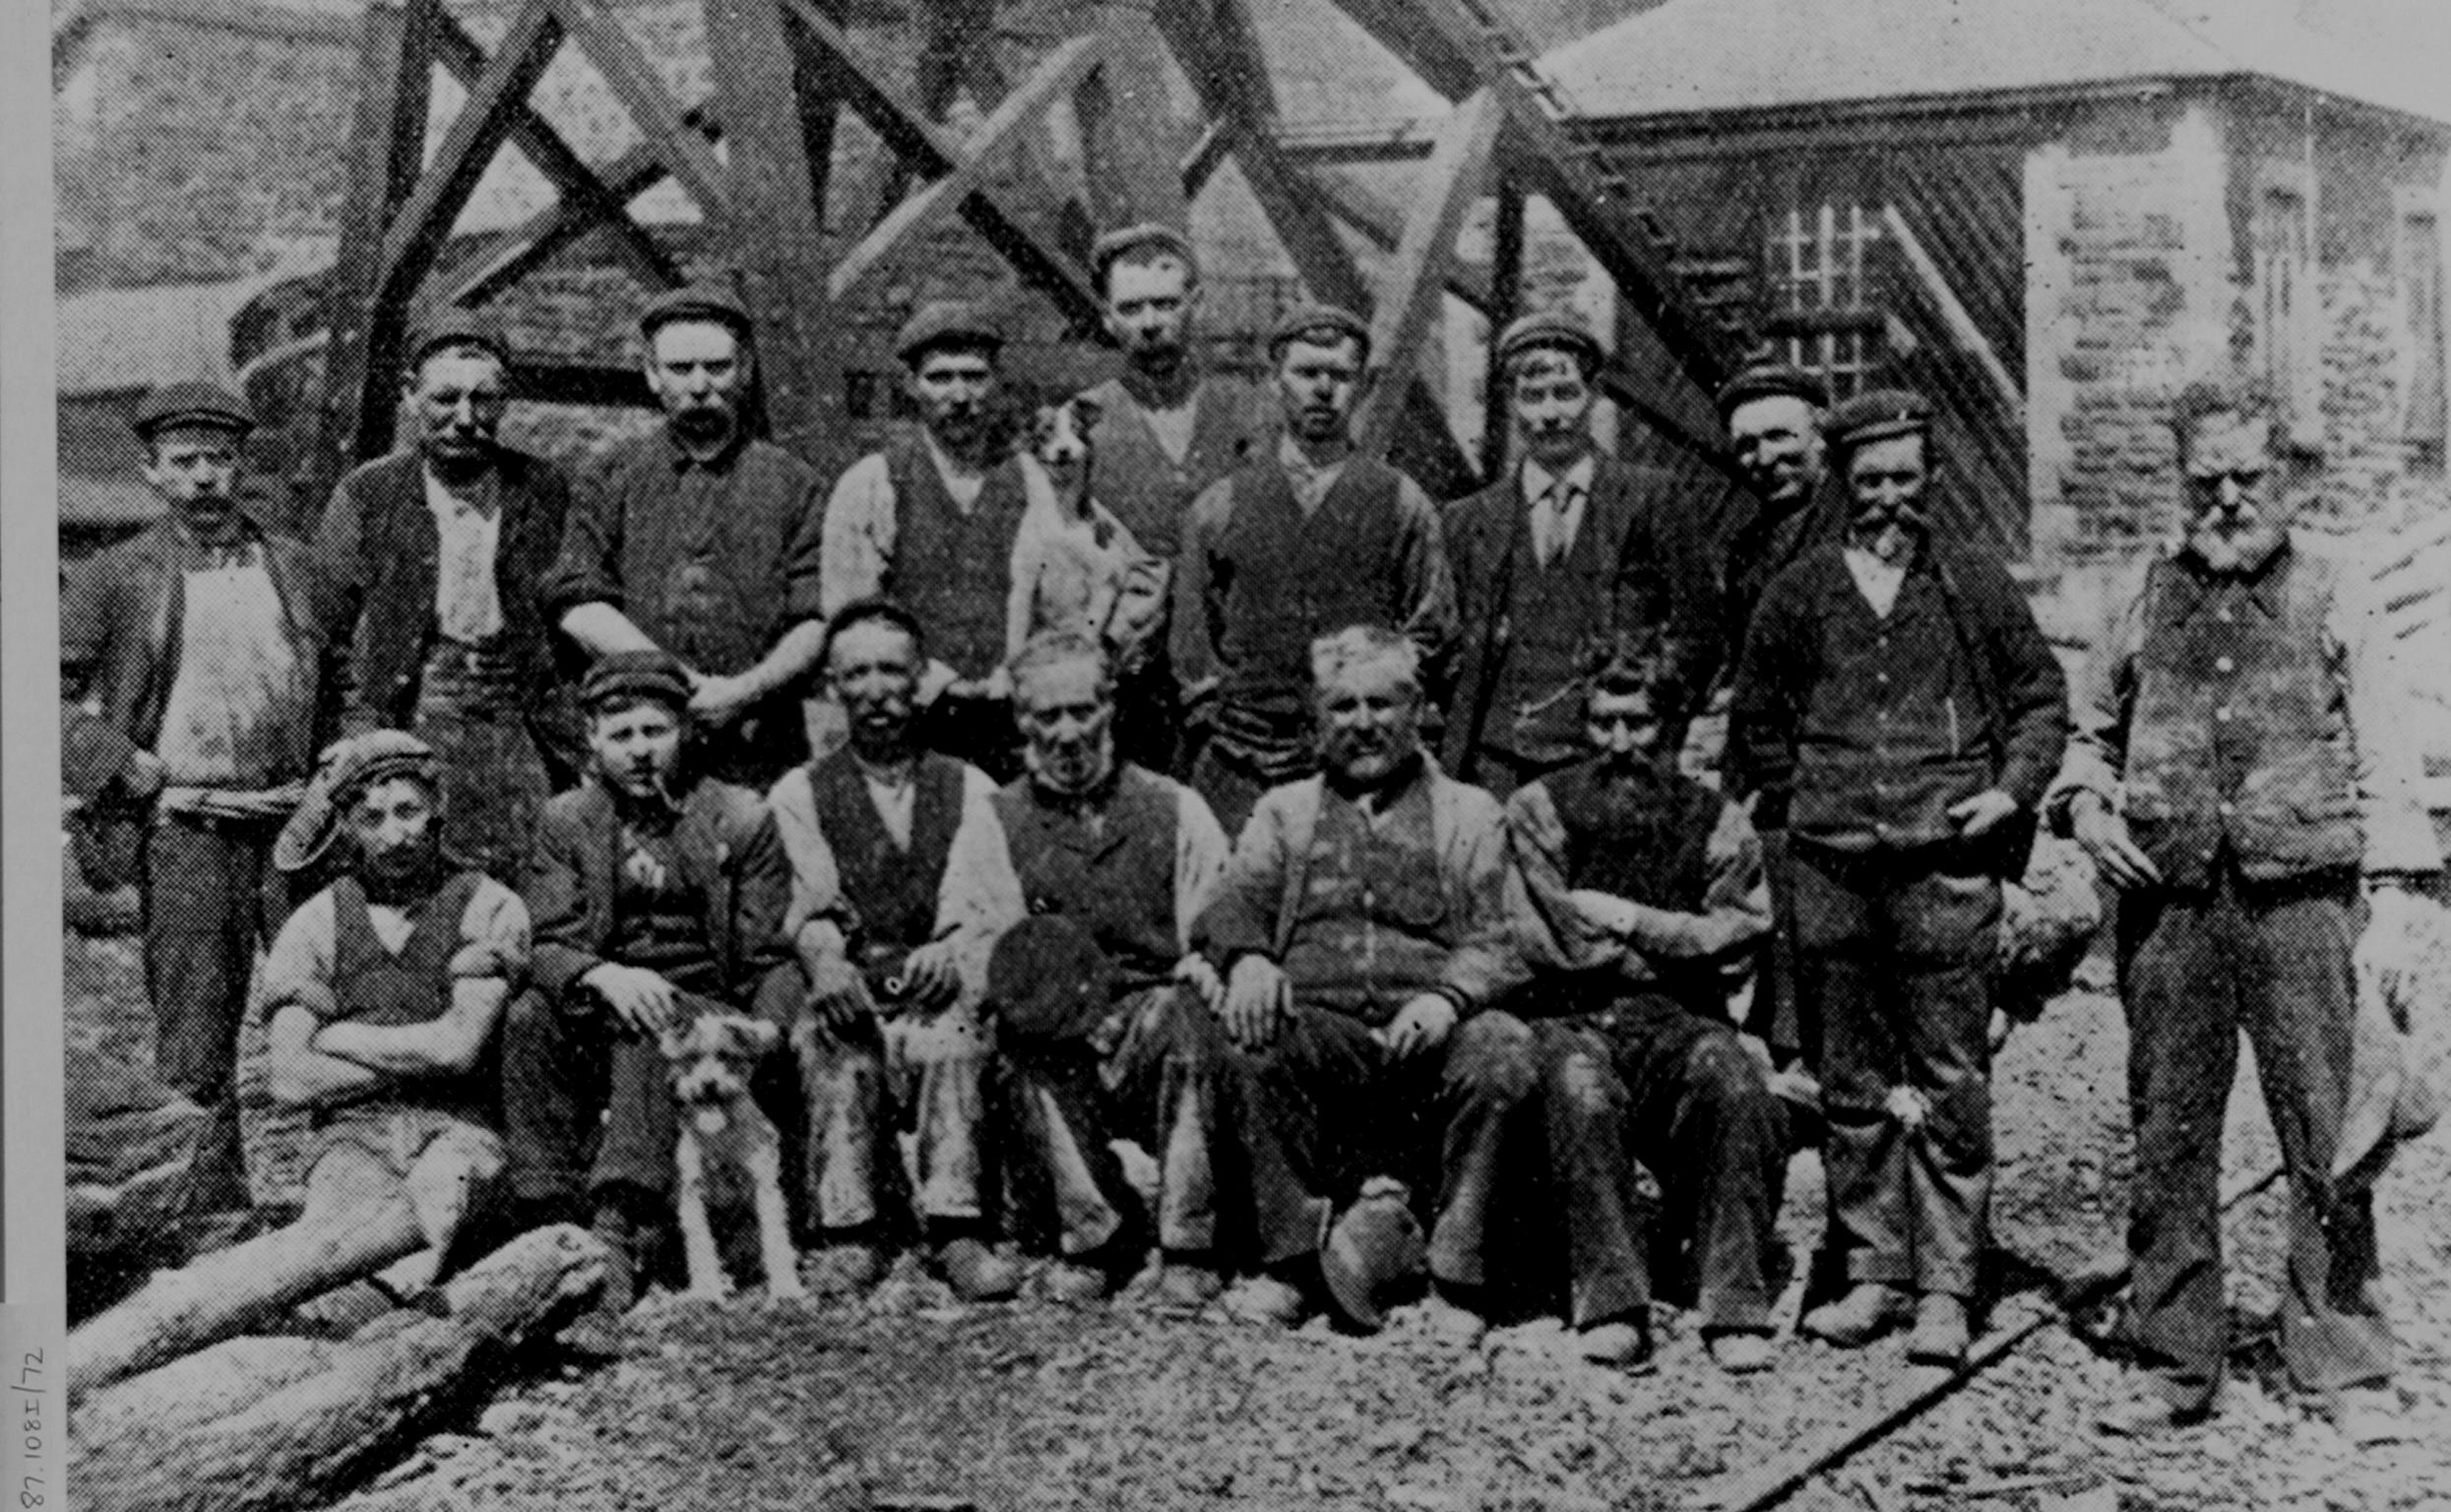 Garw Colliery, photograph